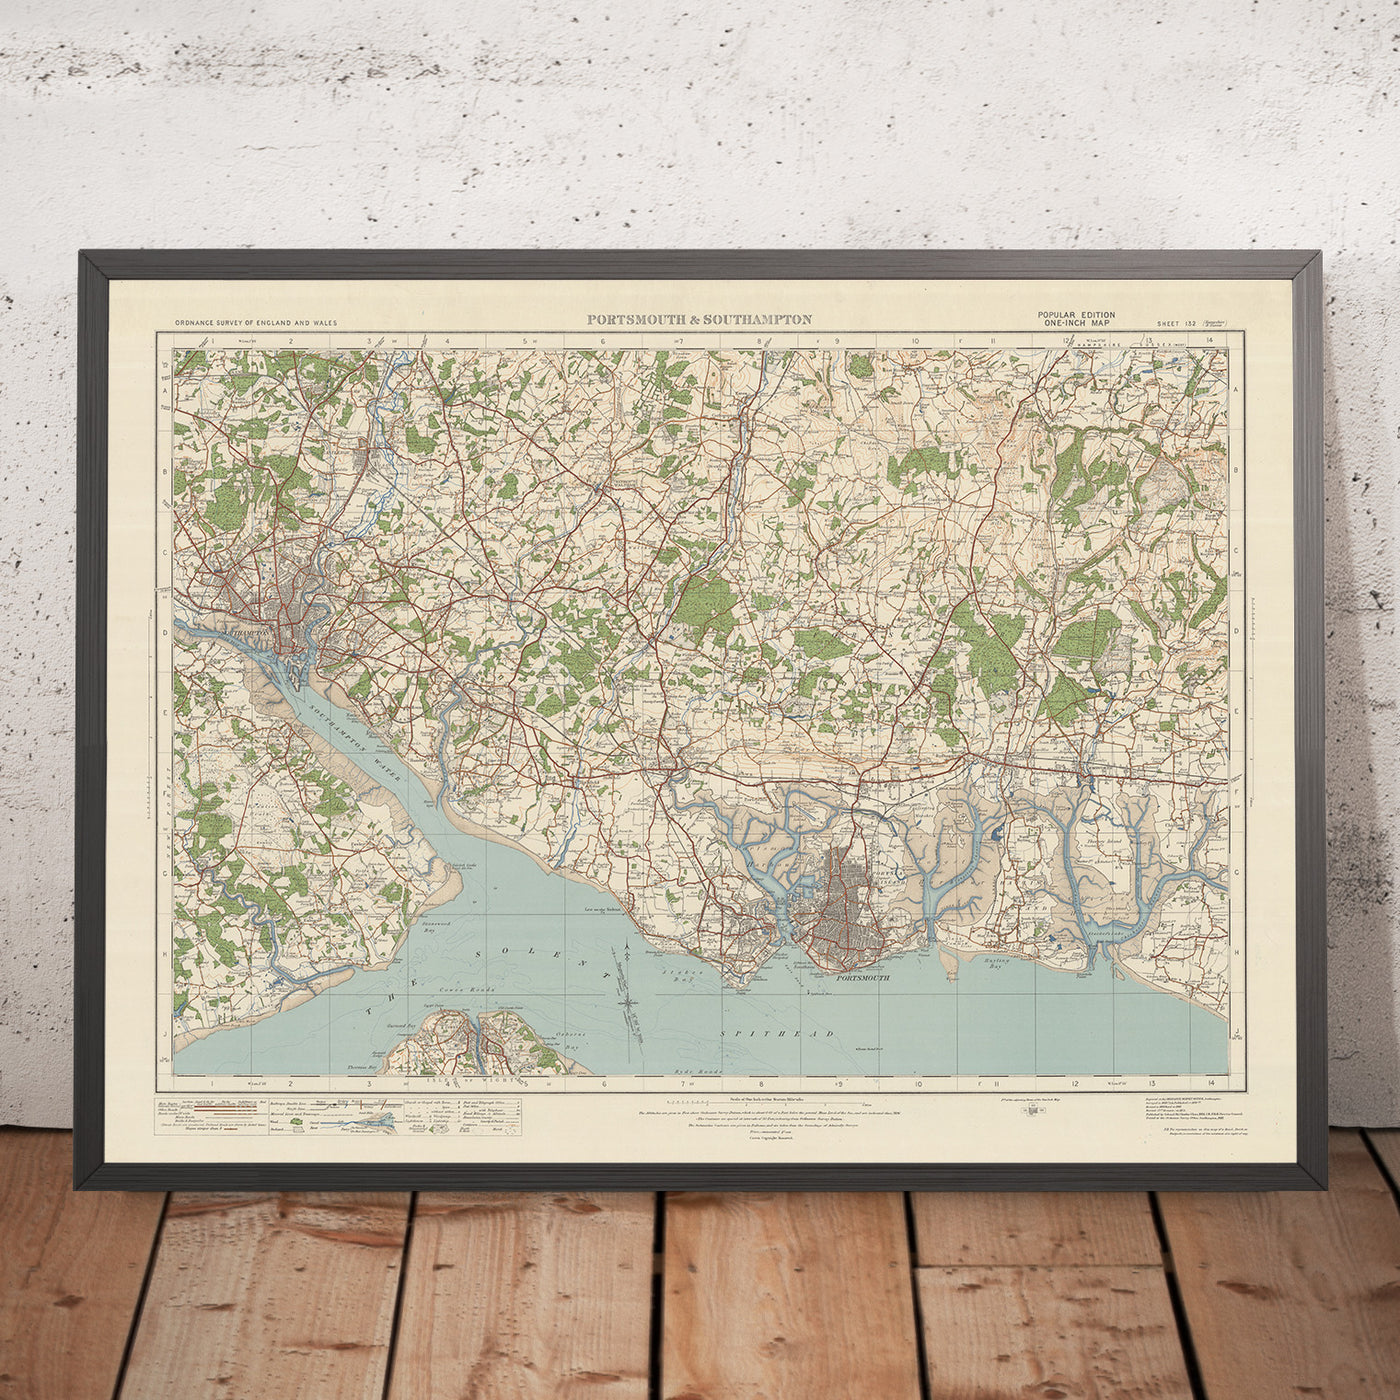 Mapa de Old Ordnance Survey, hoja 132 - Portsmouth y Southampton, 1925: Eastleigh, Fareham, Havant, Hayling Island, Chichester Harbor AONB